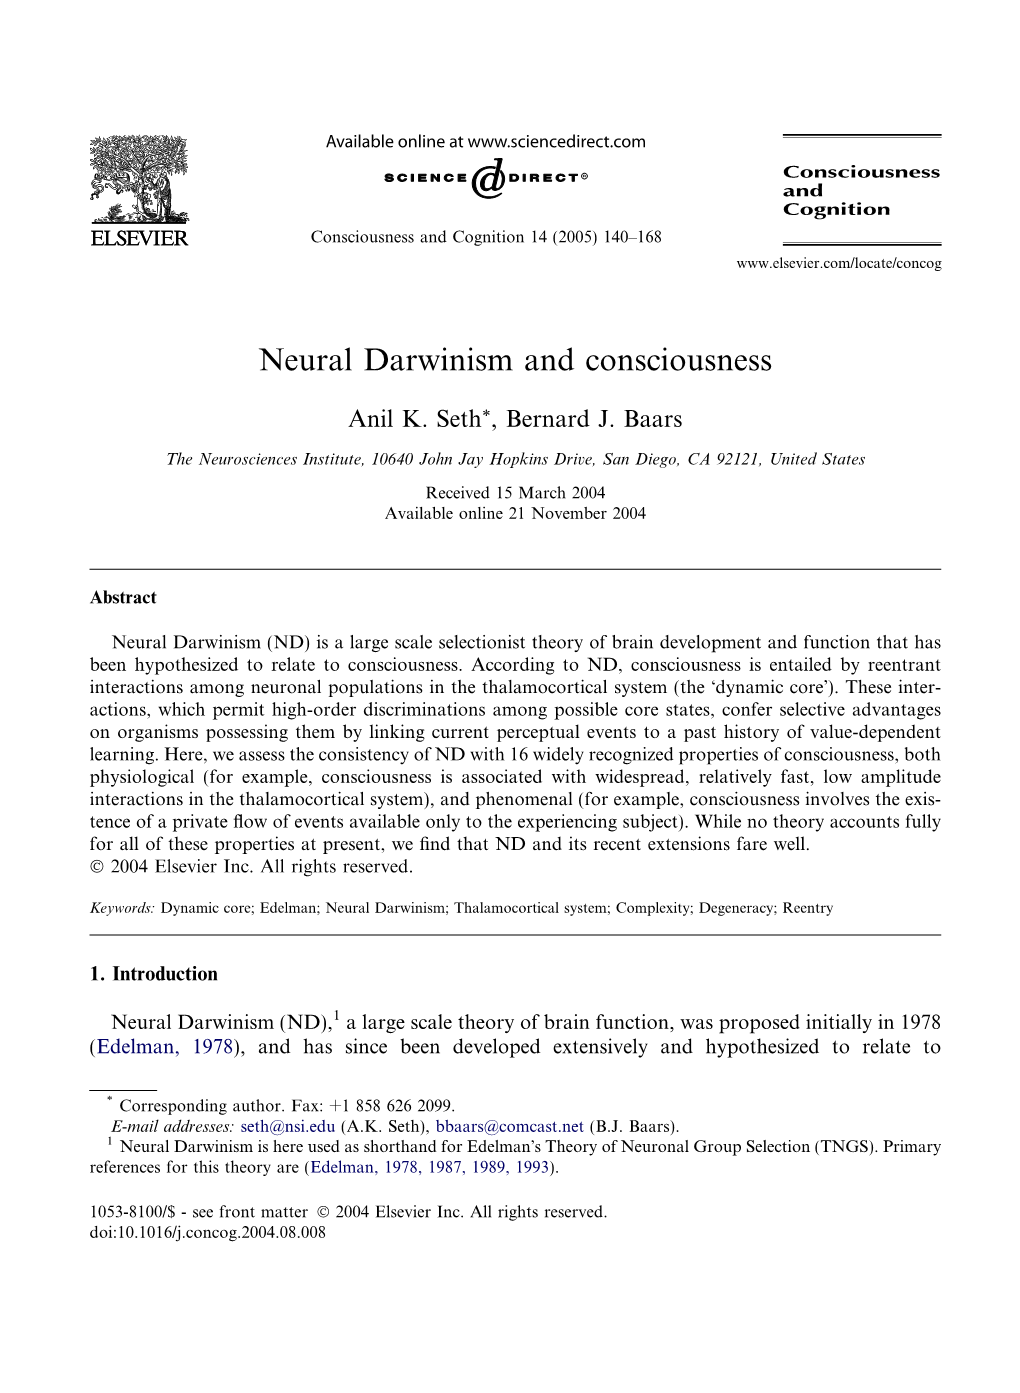 Neural Darwinism and Consciousness